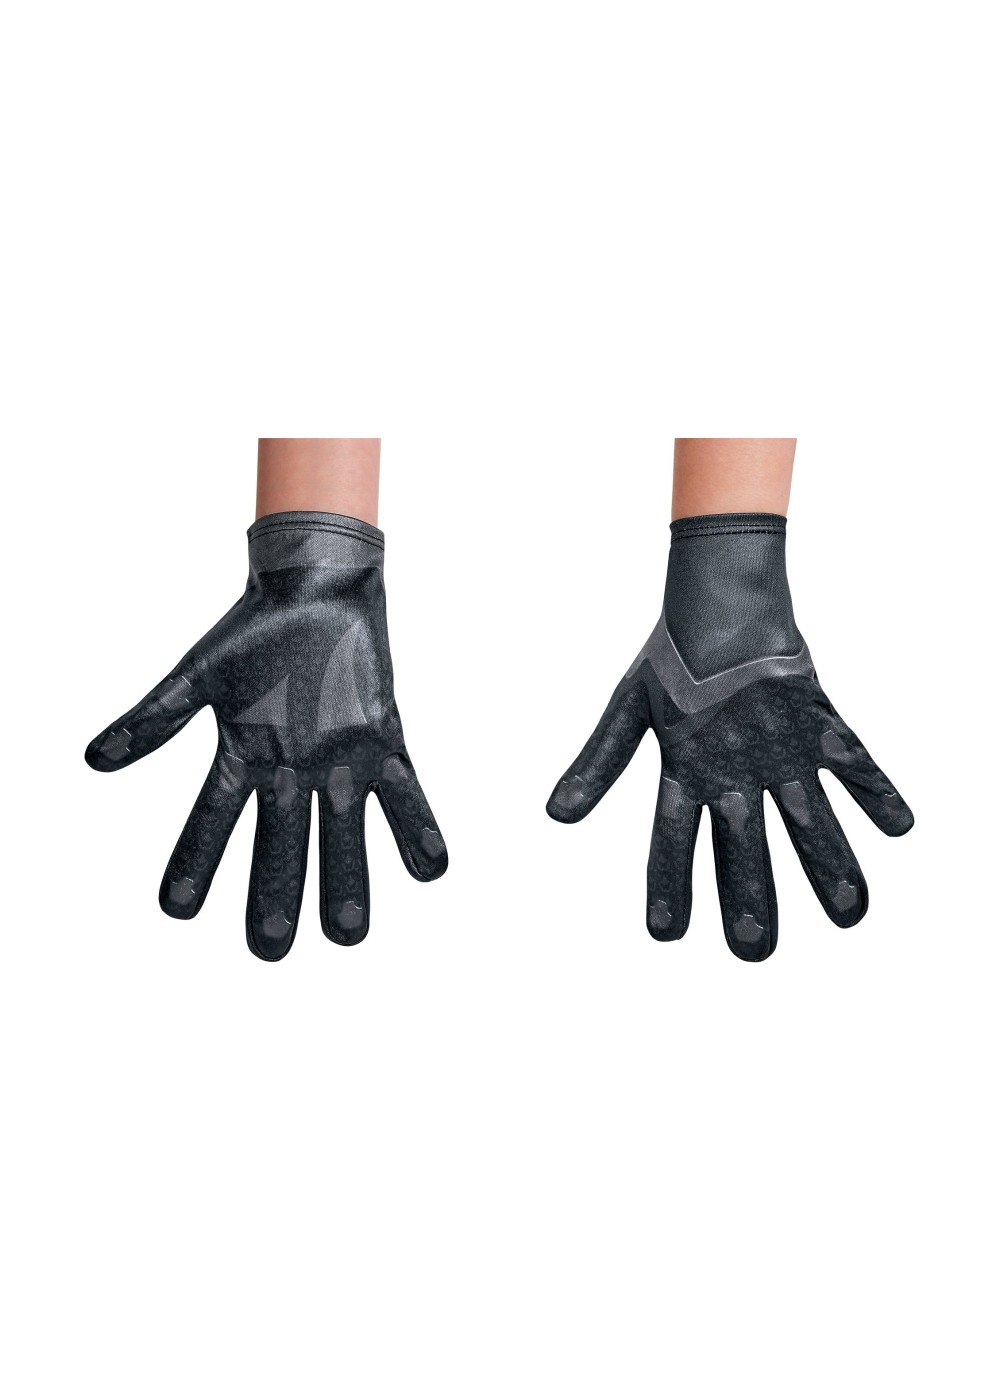 Power Rangers Movie Black Boys Costume Gloves - Accessories